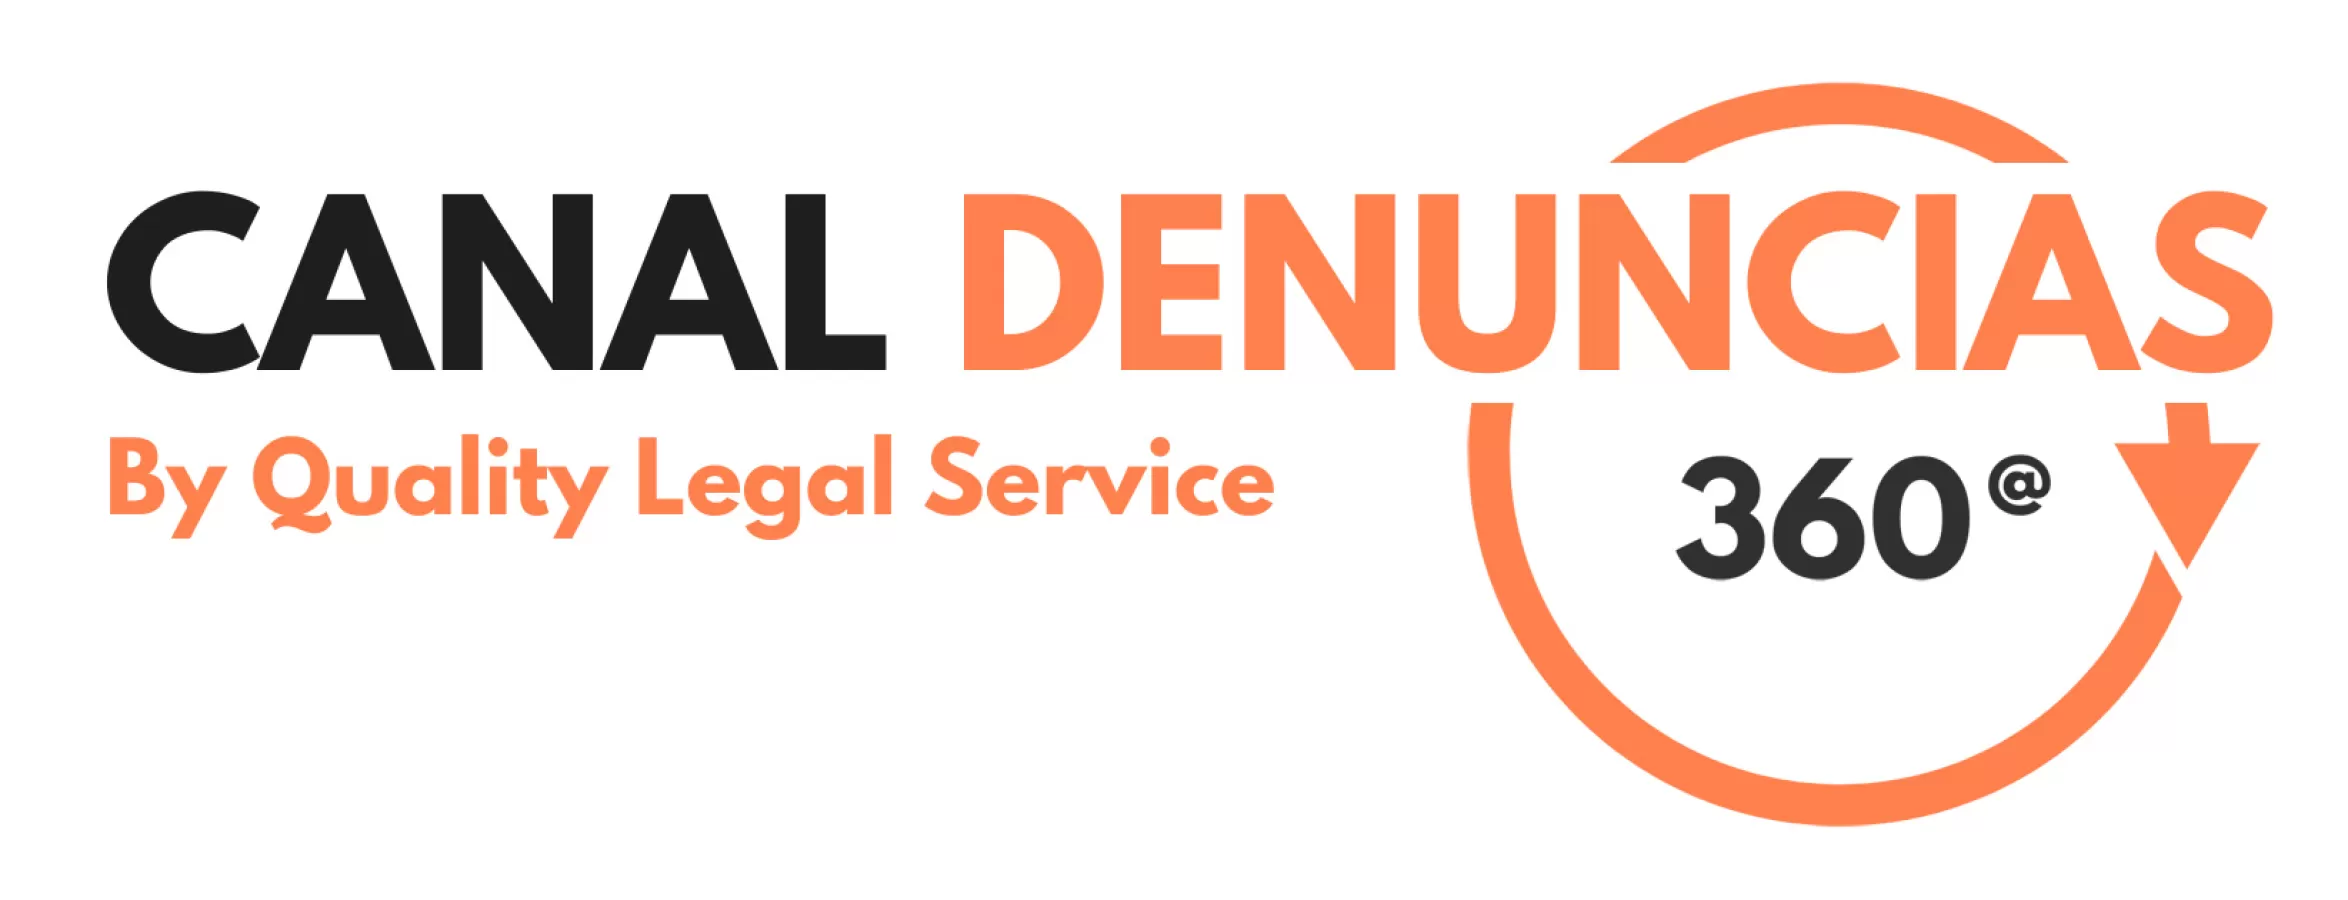 Canal denuncias - Quality Legal Service